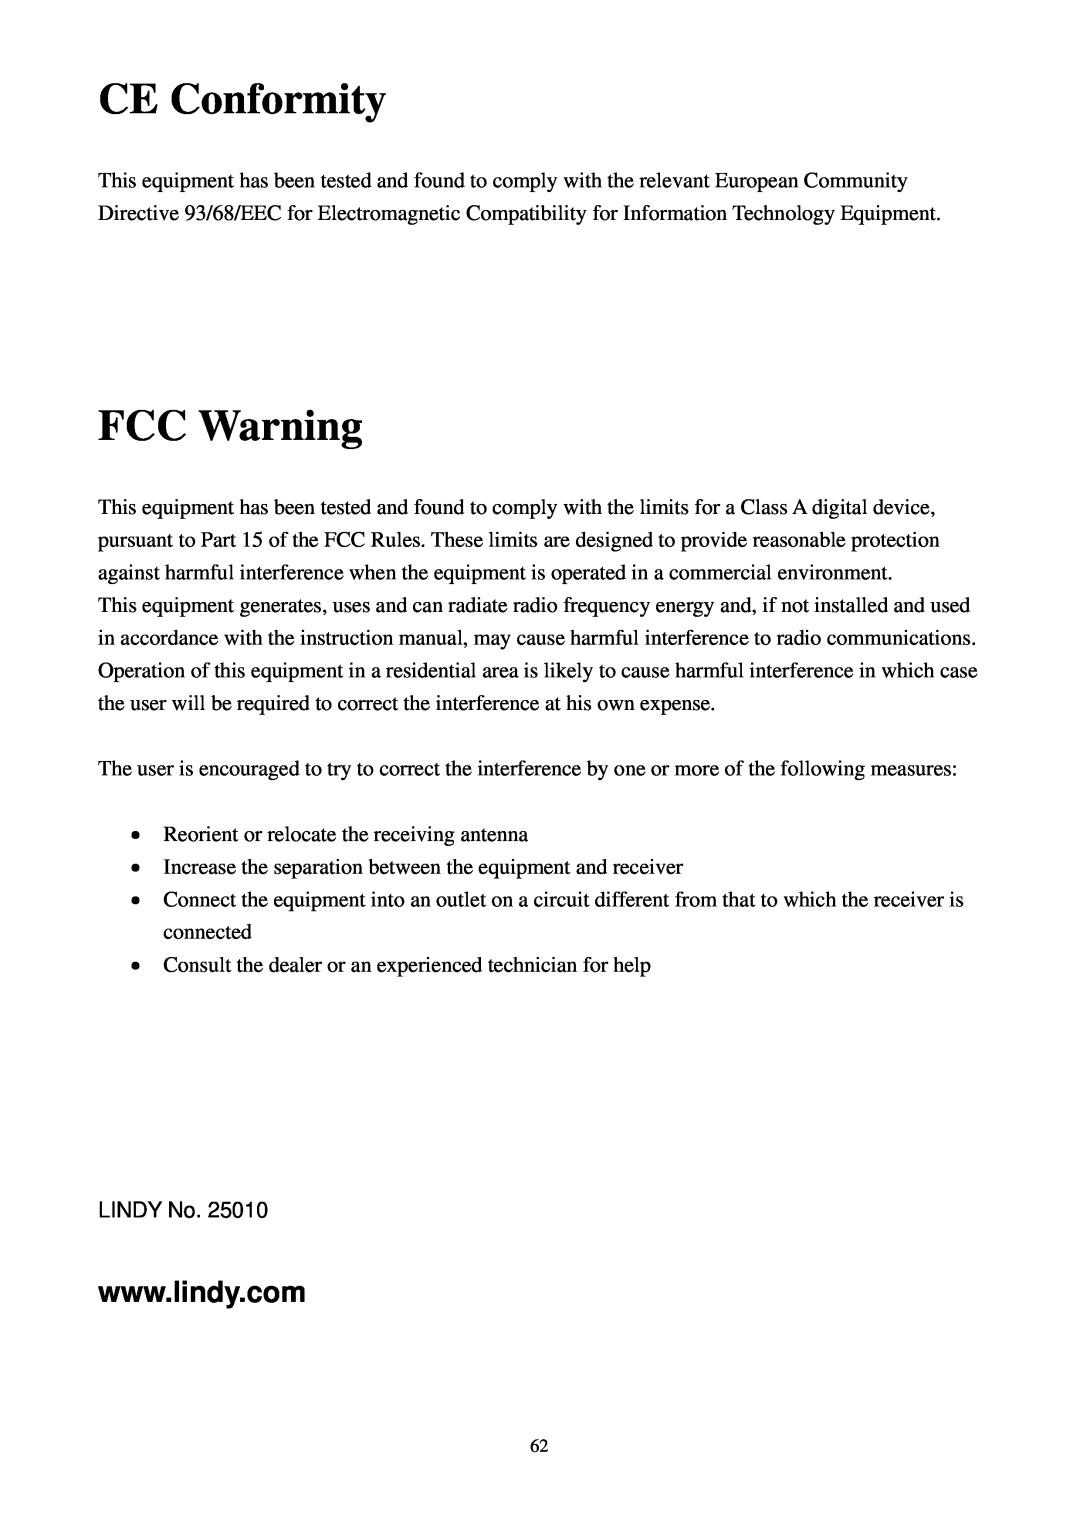 Lindy 25010 user manual CE Conformity, FCC Warning 